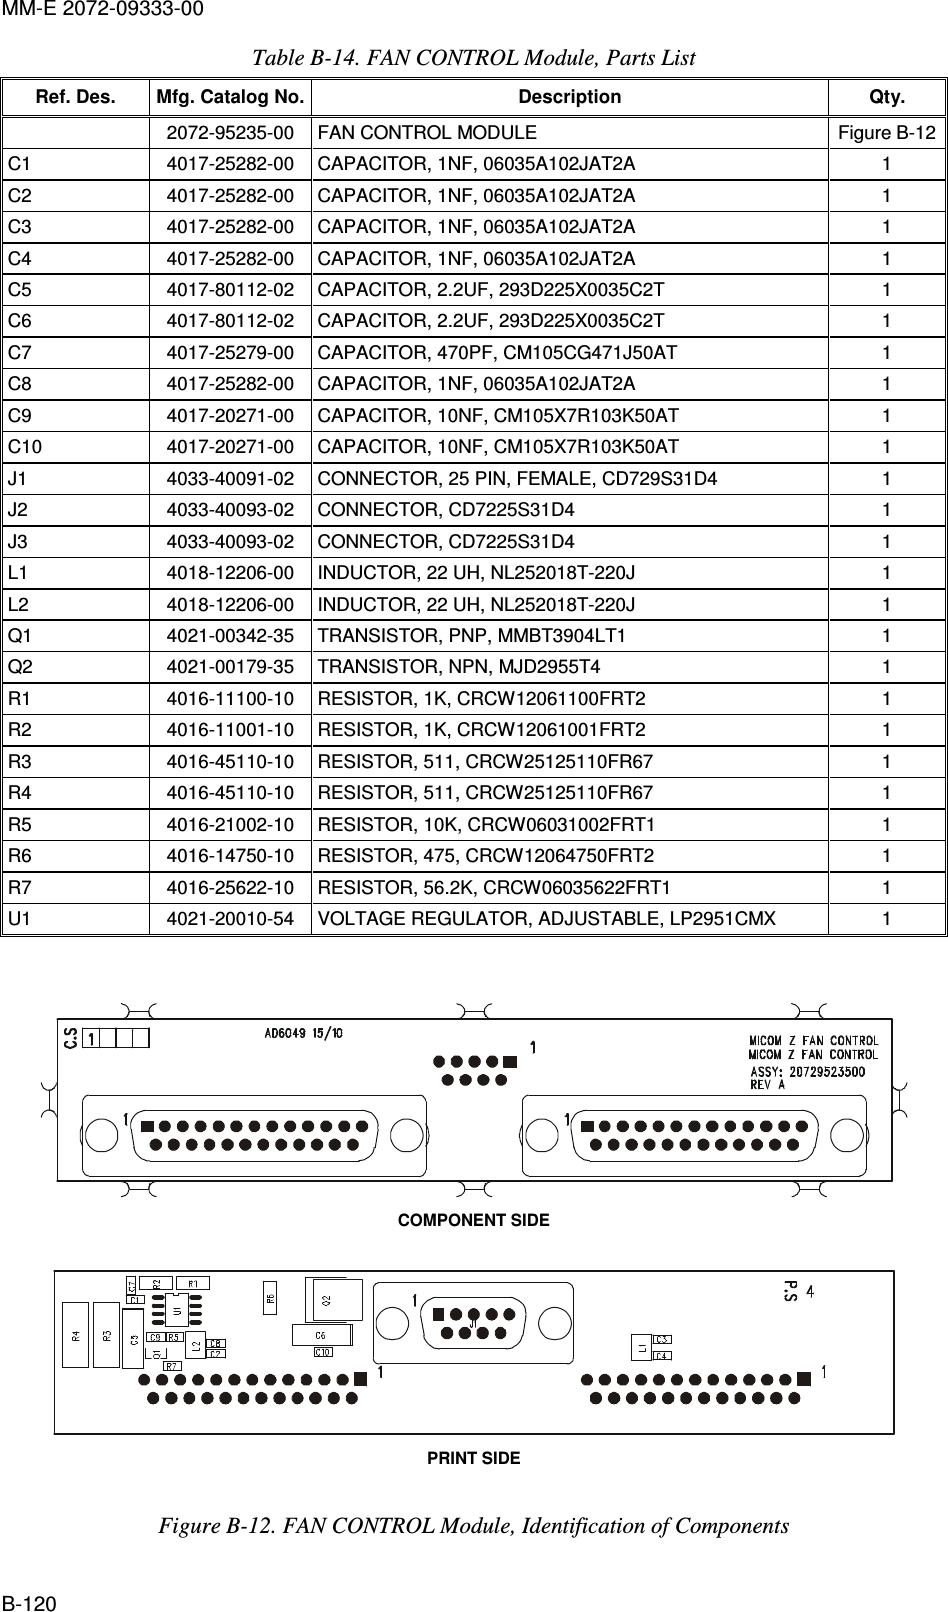 MM-E 2072-09333-00 B-120 Table  B-14. FAN CONTROL Module, Parts List Ref. Des.  Mfg. Catalog No. Description  Qty.   2072-95235-00  FAN CONTROL MODULE   Figure  B-12 C1  4017-25282-00  CAPACITOR, 1NF, 06035A102JAT2A  1 C2  4017-25282-00  CAPACITOR, 1NF, 06035A102JAT2A  1 C3  4017-25282-00  CAPACITOR, 1NF, 06035A102JAT2A  1 C4  4017-25282-00  CAPACITOR, 1NF, 06035A102JAT2A  1 C5  4017-80112-02  CAPACITOR, 2.2UF, 293D225X0035C2T  1 C6  4017-80112-02  CAPACITOR, 2.2UF, 293D225X0035C2T  1 C7  4017-25279-00  CAPACITOR, 470PF, CM105CG471J50AT  1 C8  4017-25282-00  CAPACITOR, 1NF, 06035A102JAT2A  1 C9  4017-20271-00  CAPACITOR, 10NF, CM105X7R103K50AT  1 C10  4017-20271-00  CAPACITOR, 10NF, CM105X7R103K50AT  1 J1  4033-40091-02  CONNECTOR, 25 PIN, FEMALE, CD729S31D4  1 J2  4033-40093-02  CONNECTOR, CD7225S31D4  1 J3  4033-40093-02  CONNECTOR, CD7225S31D4  1 L1  4018-12206-00  INDUCTOR, 22 UH, NL252018T-220J  1 L2  4018-12206-00  INDUCTOR, 22 UH, NL252018T-220J  1 Q1  4021-00342-35  TRANSISTOR, PNP, MMBT3904LT1  1 Q2  4021-00179-35  TRANSISTOR, NPN, MJD2955T4  1 R1  4016-11100-10  RESISTOR, 1K, CRCW12061100FRT2  1 R2  4016-11001-10  RESISTOR, 1K, CRCW12061001FRT2  1 R3  4016-45110-10  RESISTOR, 511, CRCW25125110FR67  1 R4  4016-45110-10  RESISTOR, 511, CRCW25125110FR67  1 R5  4016-21002-10  RESISTOR, 10K, CRCW06031002FRT1  1 R6  4016-14750-10  RESISTOR, 475, CRCW12064750FRT2  1 R7  4016-25622-10  RESISTOR, 56.2K, CRCW06035622FRT1  1 U1  4021-20010-54  VOLTAGE REGULATOR, ADJUSTABLE, LP2951CMX  1    COMPONENT SIDE   PRINT SIDE  Figure  B-12. FAN CONTROL Module, Identification of Components 